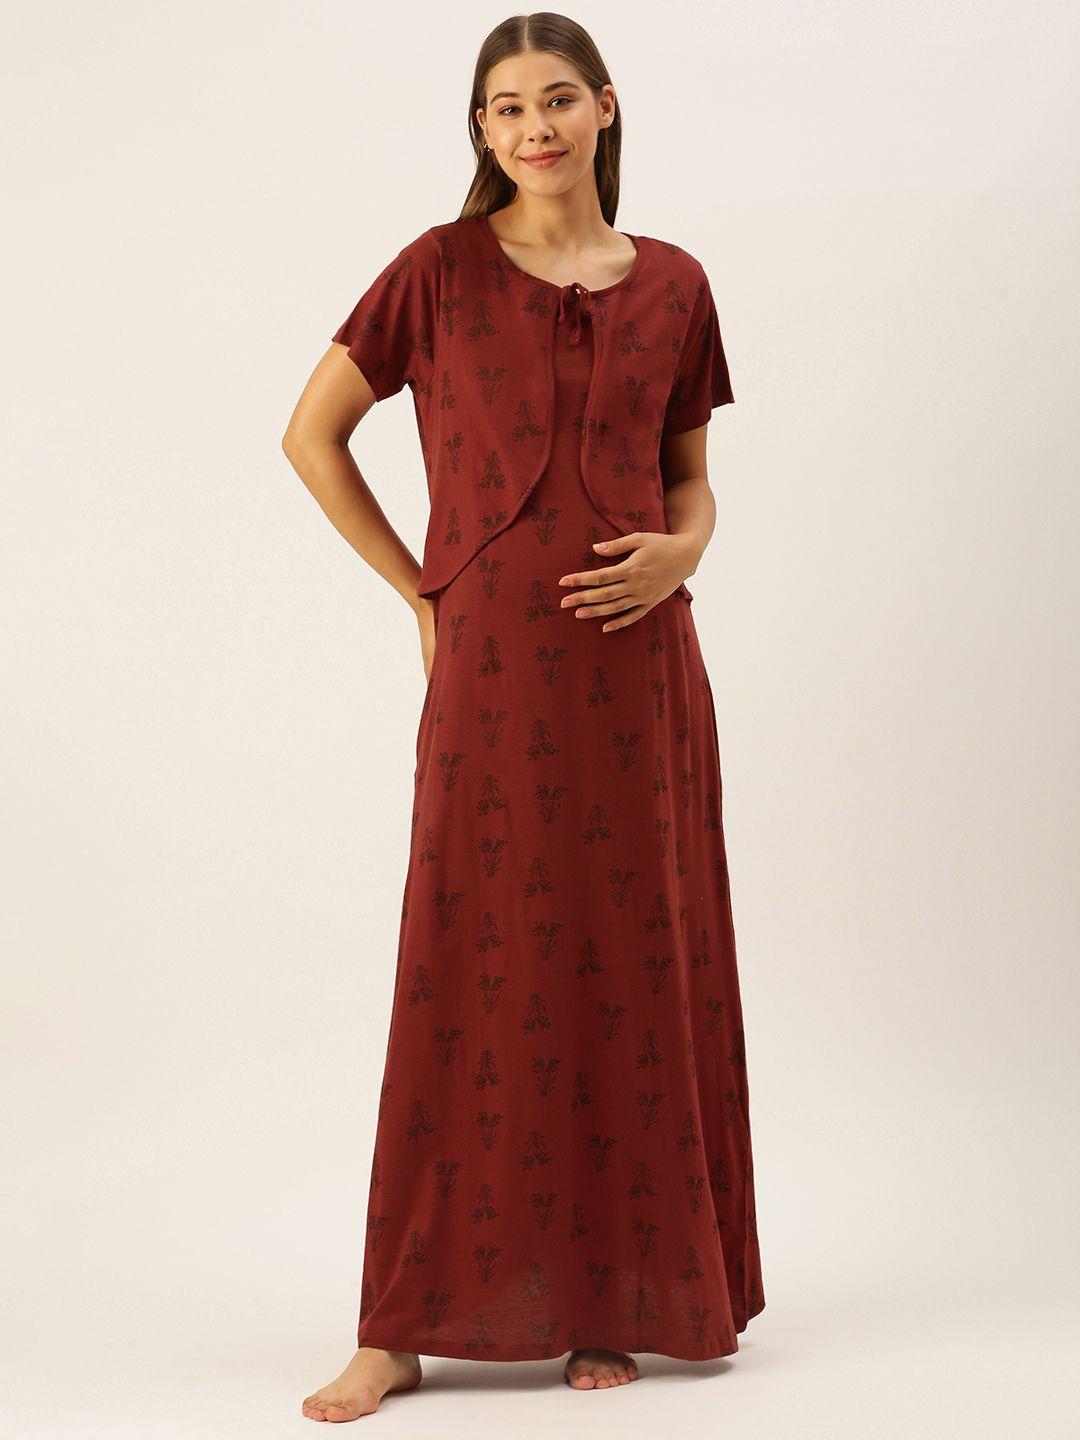 nejo-maroon-floral-print-bow-detail-layered-cotton-maxi-maternity-nightdress